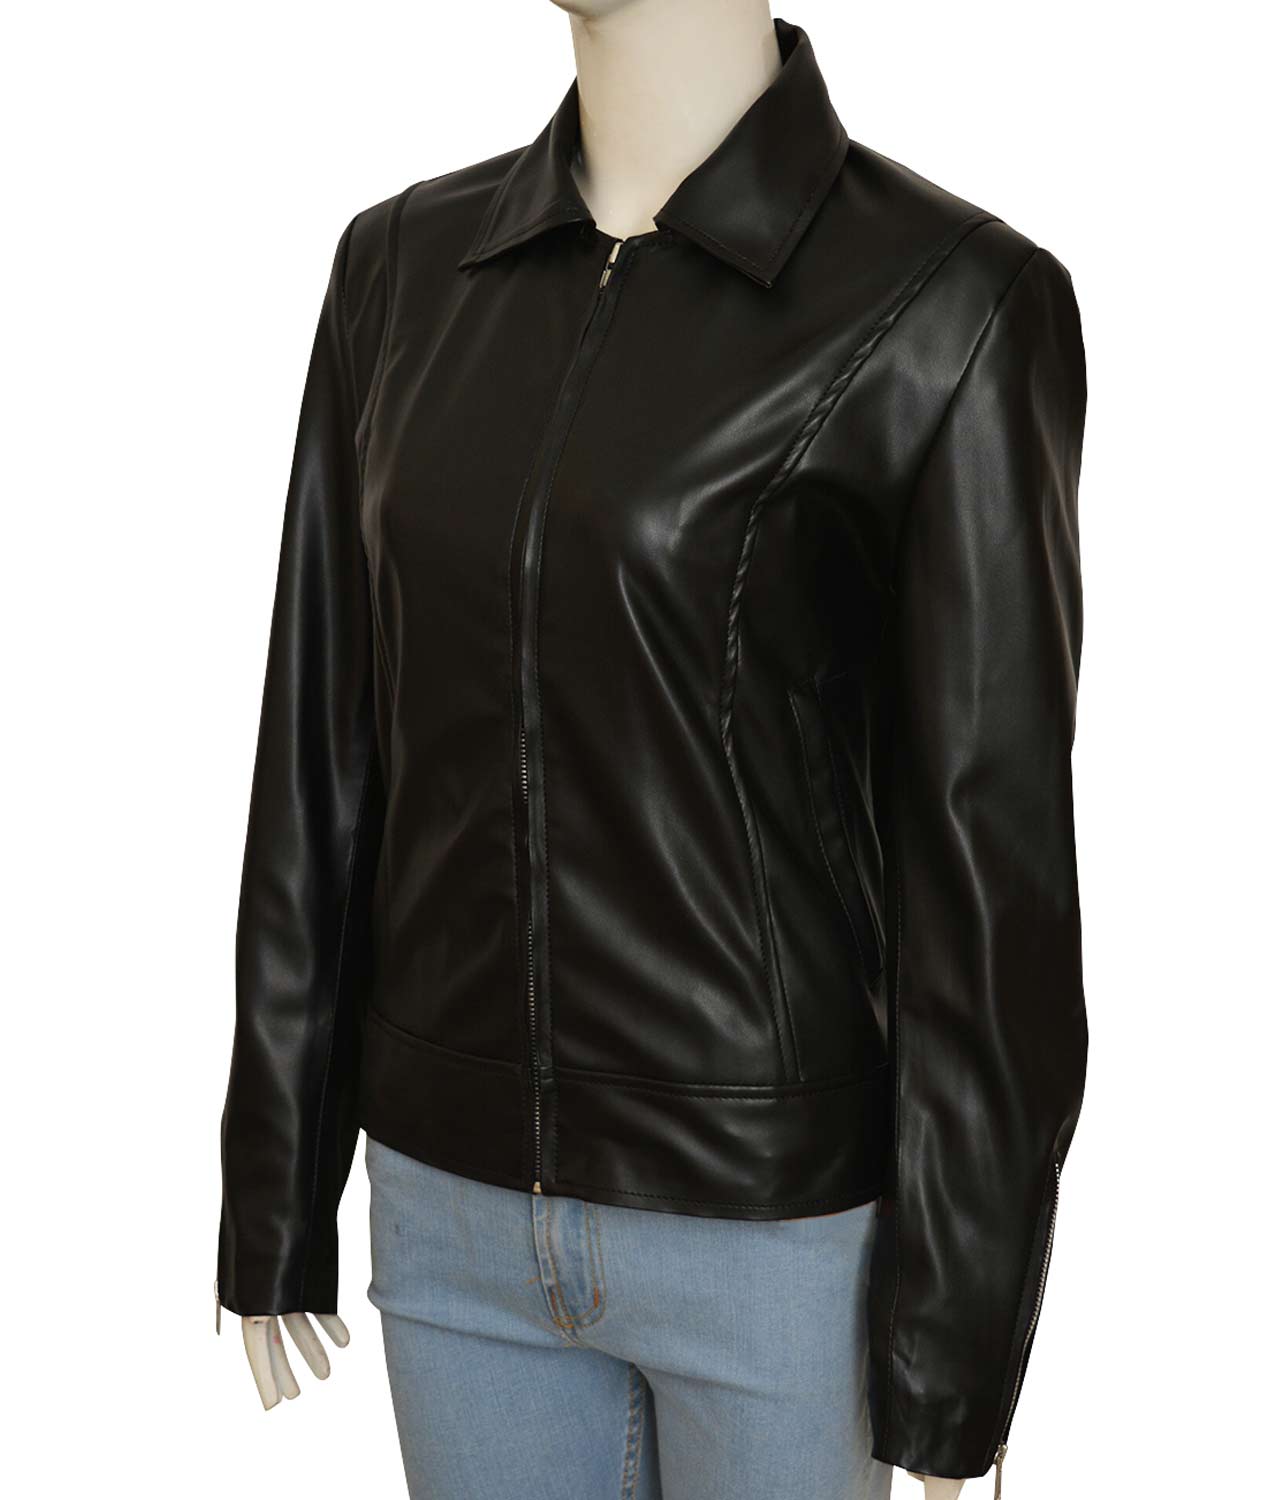 Lauren German Lucifer Chloe Decker Shirt Style Black Leather Jacket